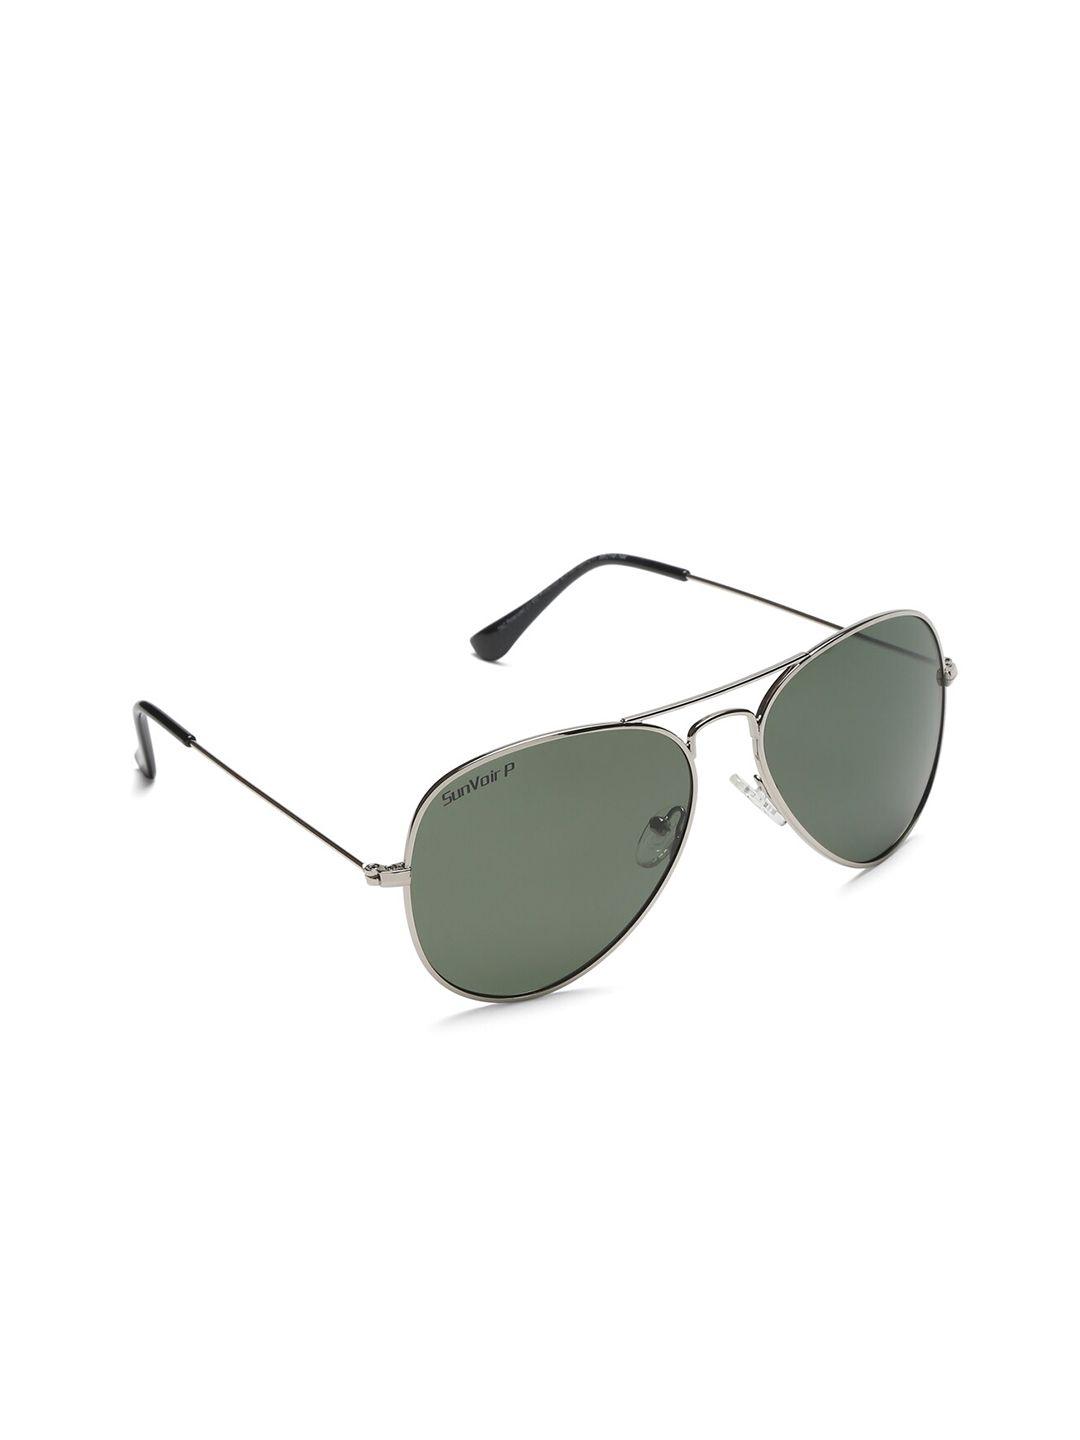 sunnies-aviator-sunglasses-with-polarised-lens